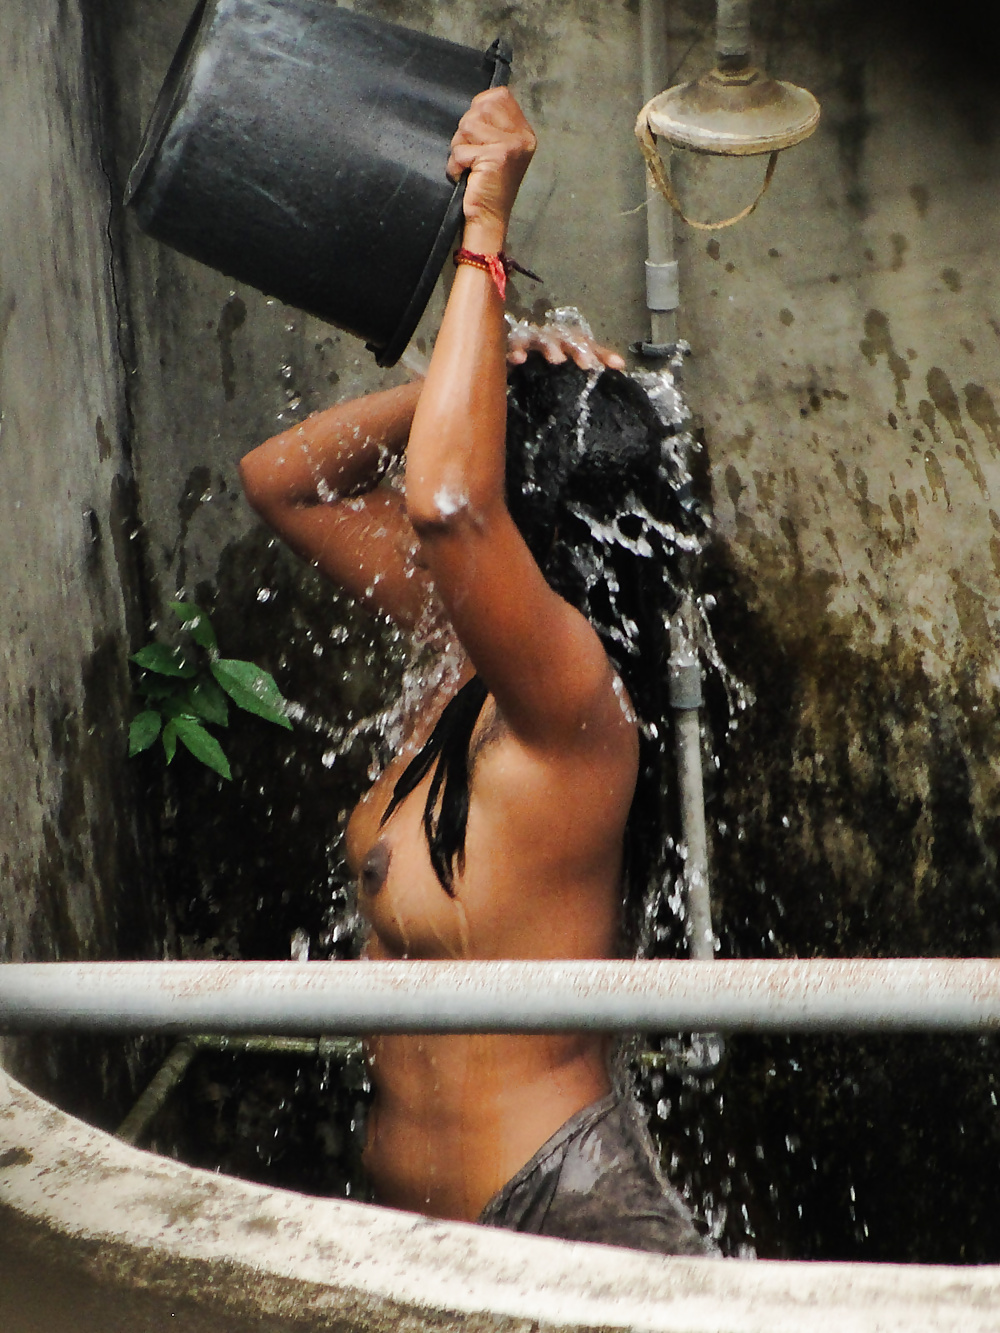 Indian Voyeur Nude - Indian Wife Voyeur Shower - Indian Girls Club